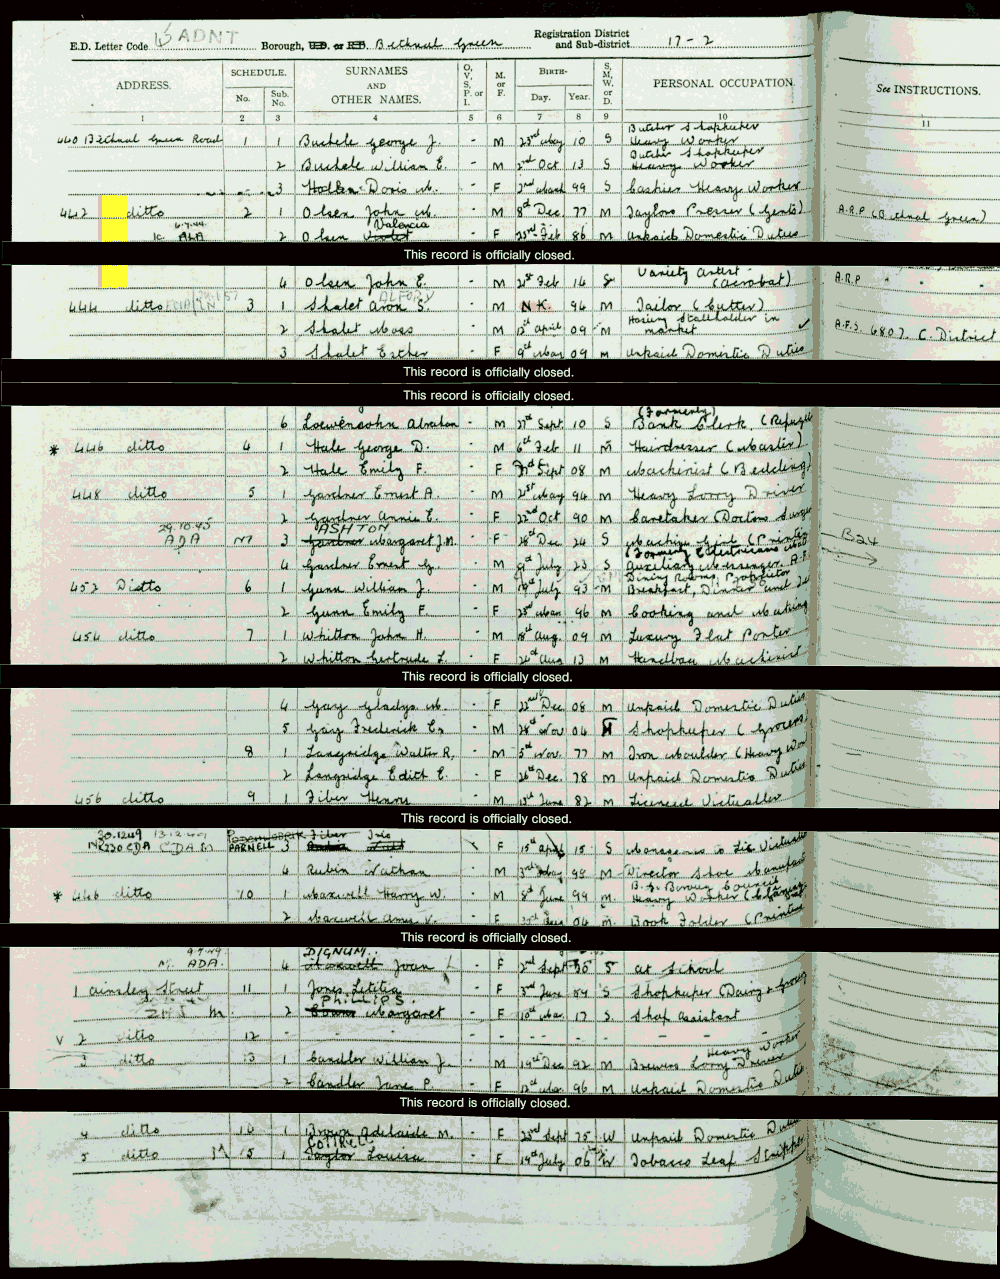 1939 census returns for Johan and Valencia and John Edward Olsen